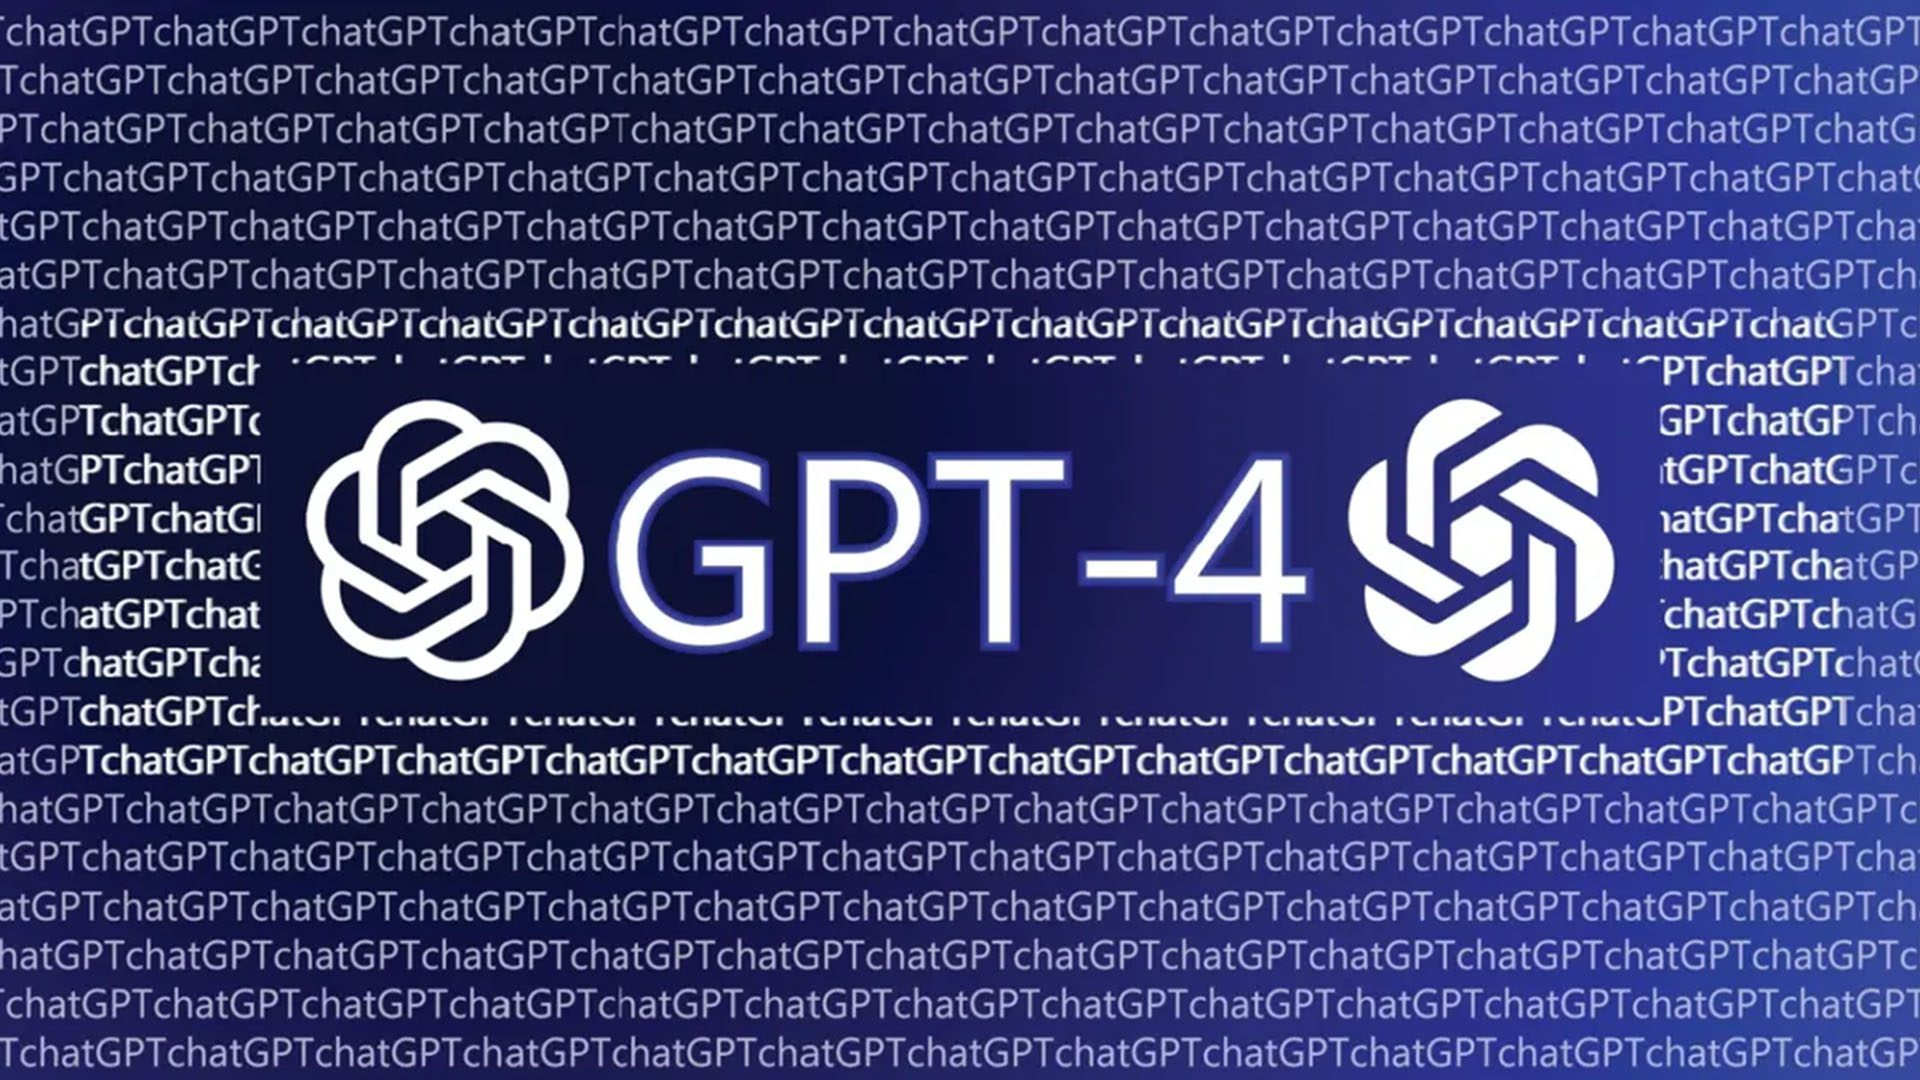 GPT-4, OpenAI's newest chatbot